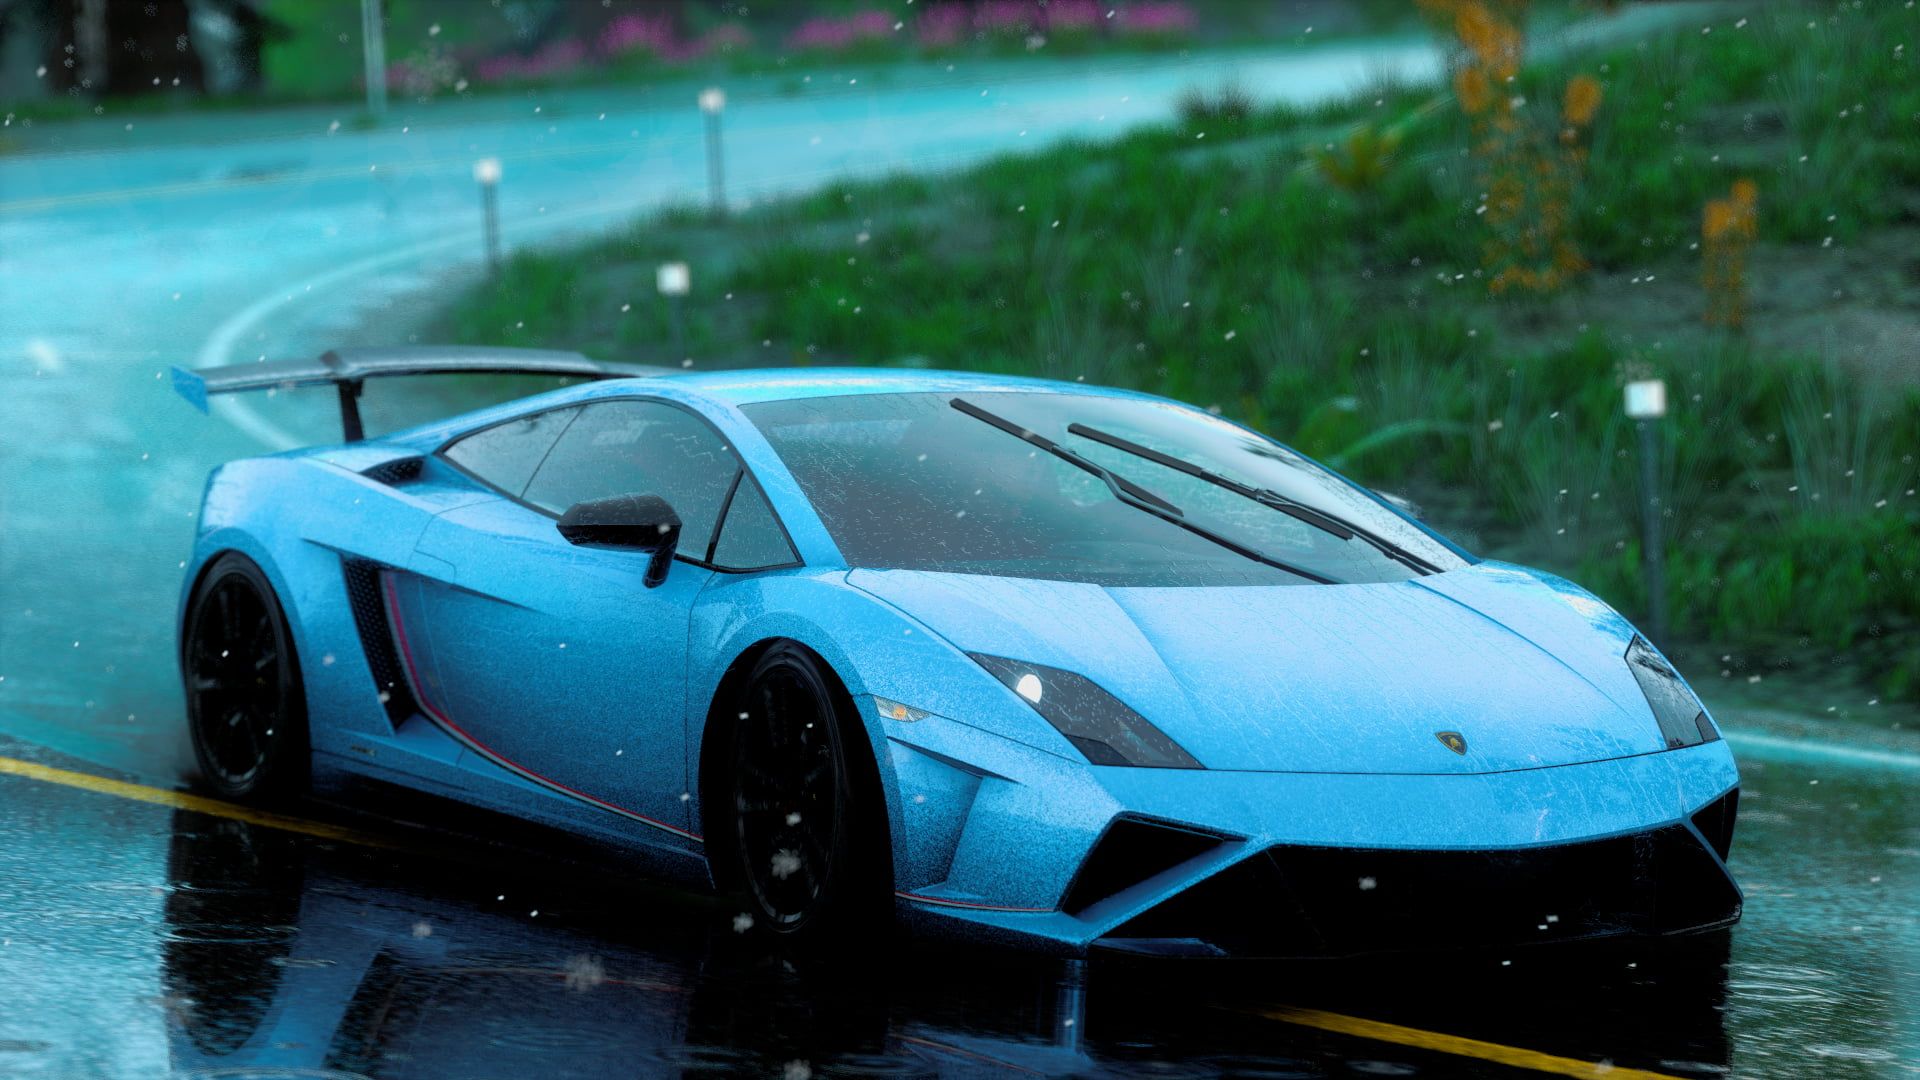 Blue Lamborghini Gallardo coupe, Driveclub, car, race cars, video